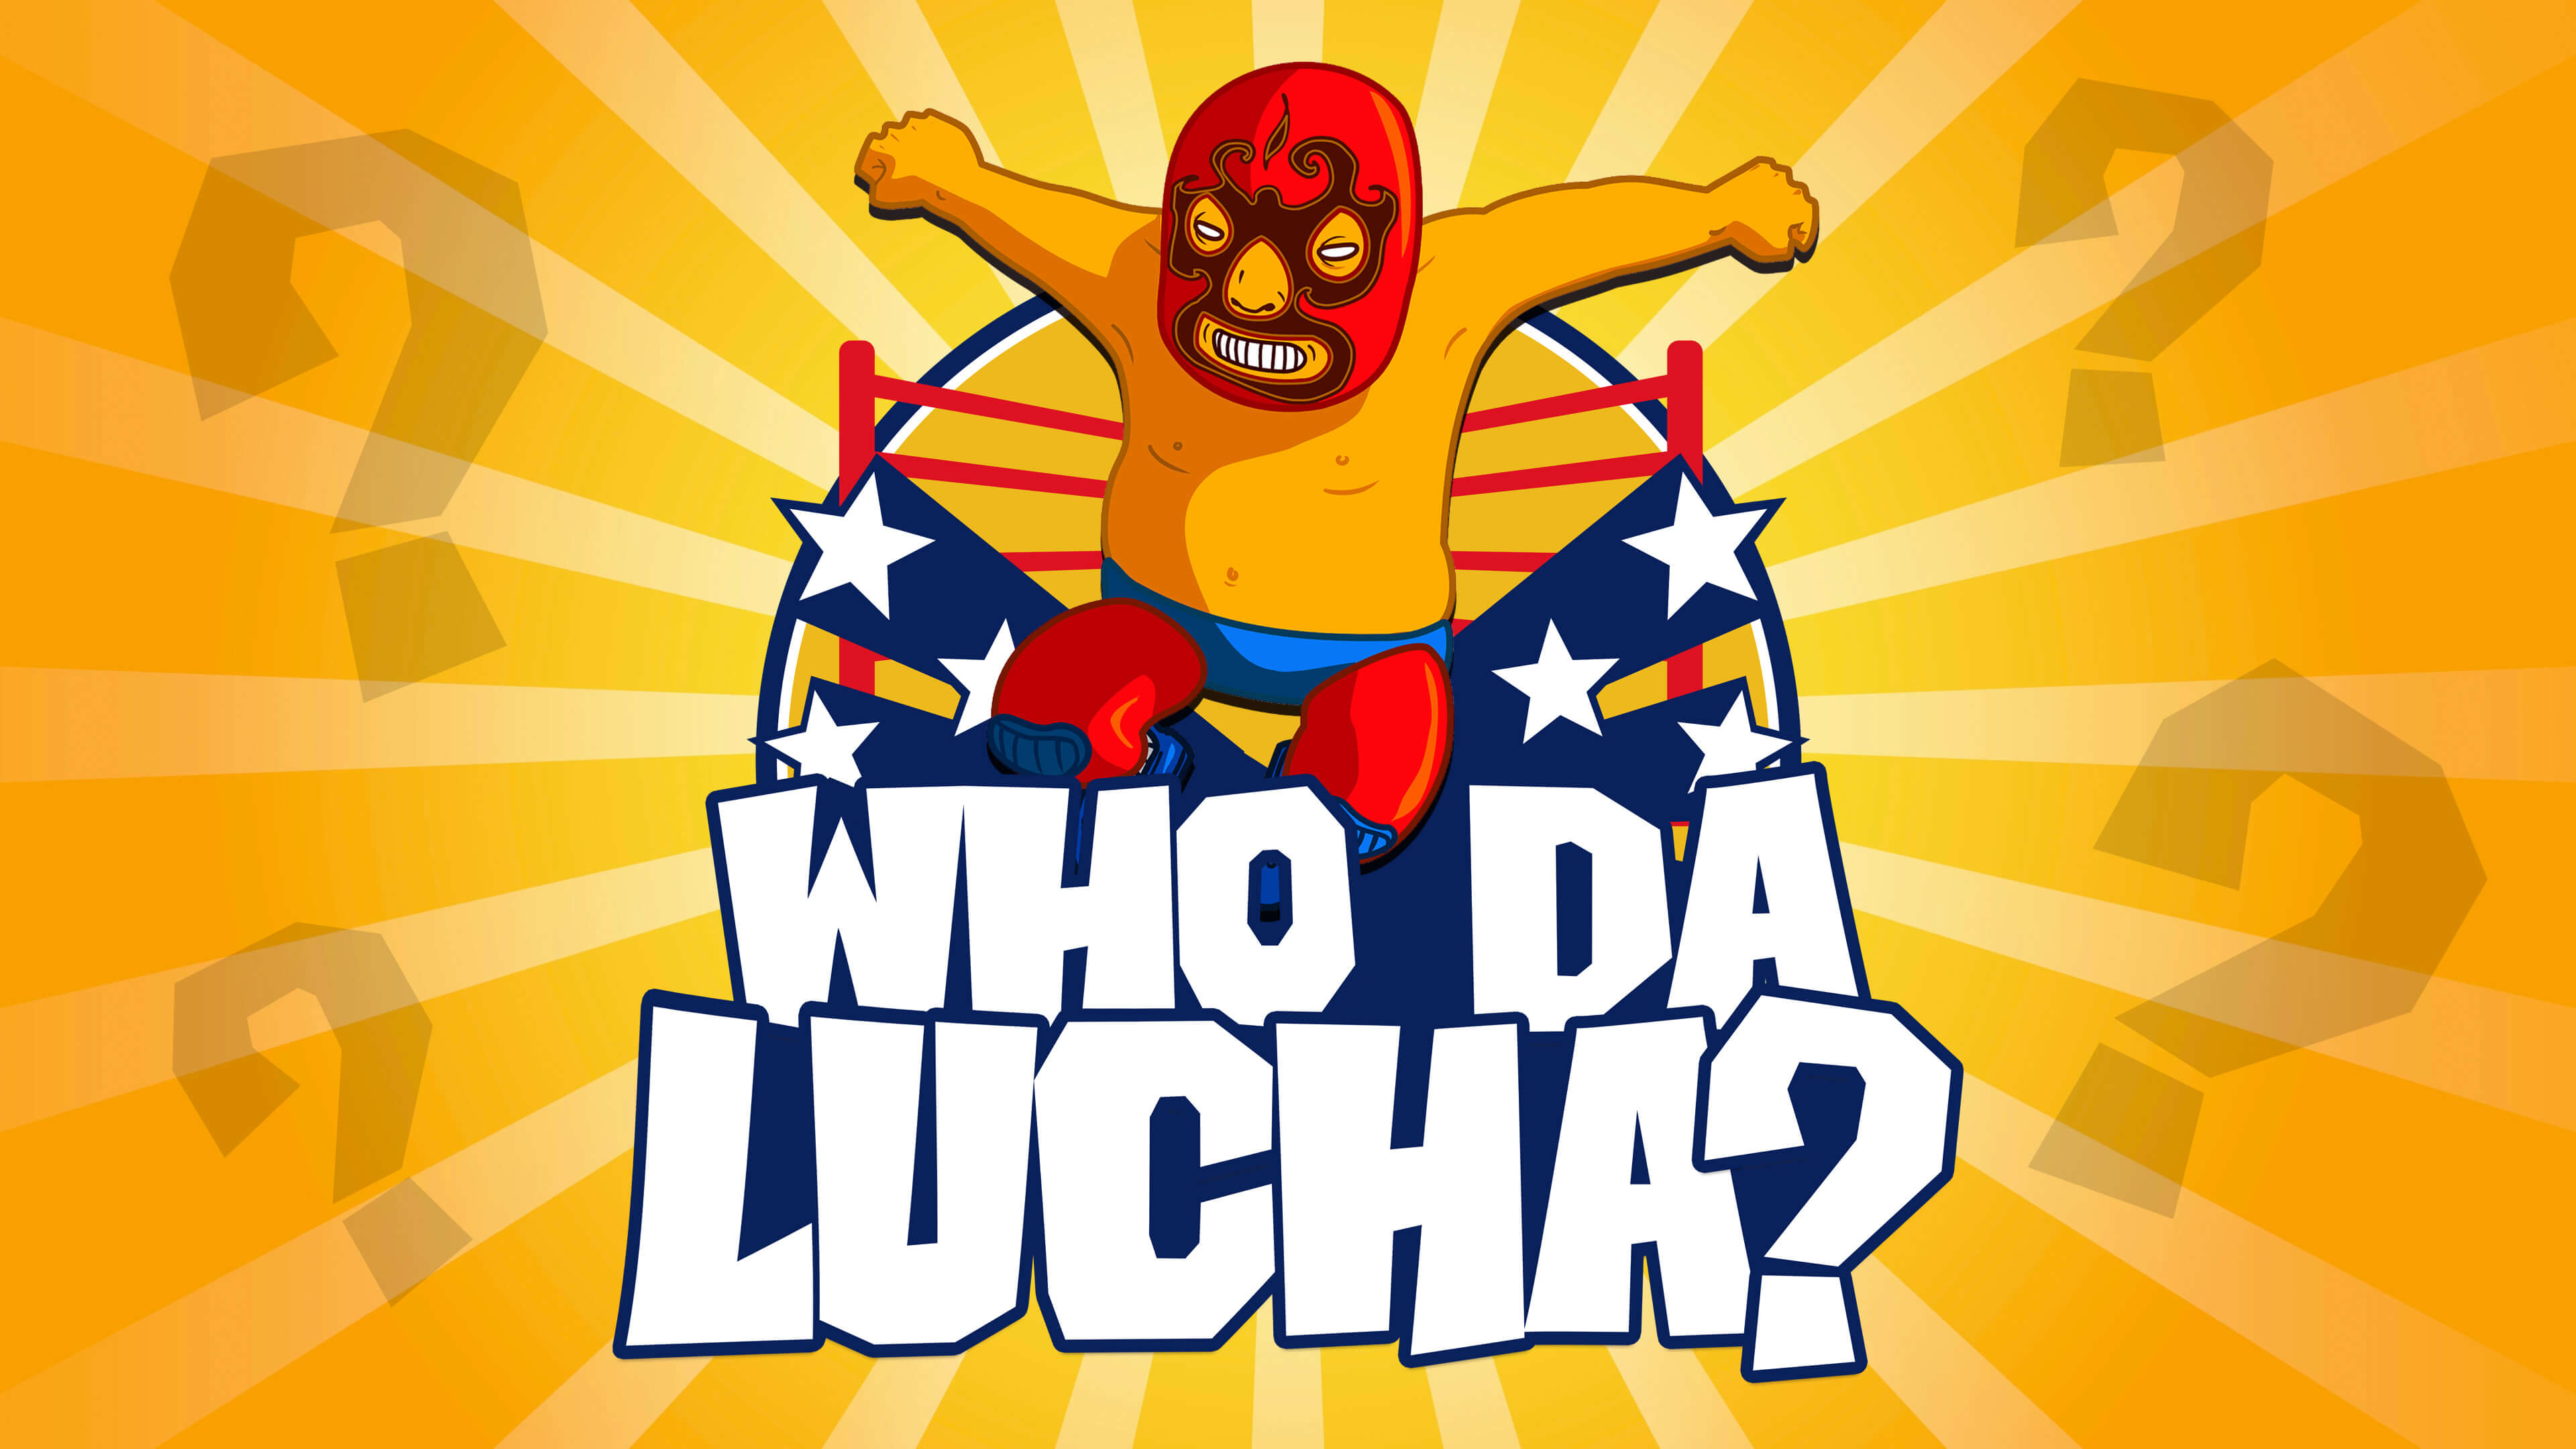 Who Da Lucha?